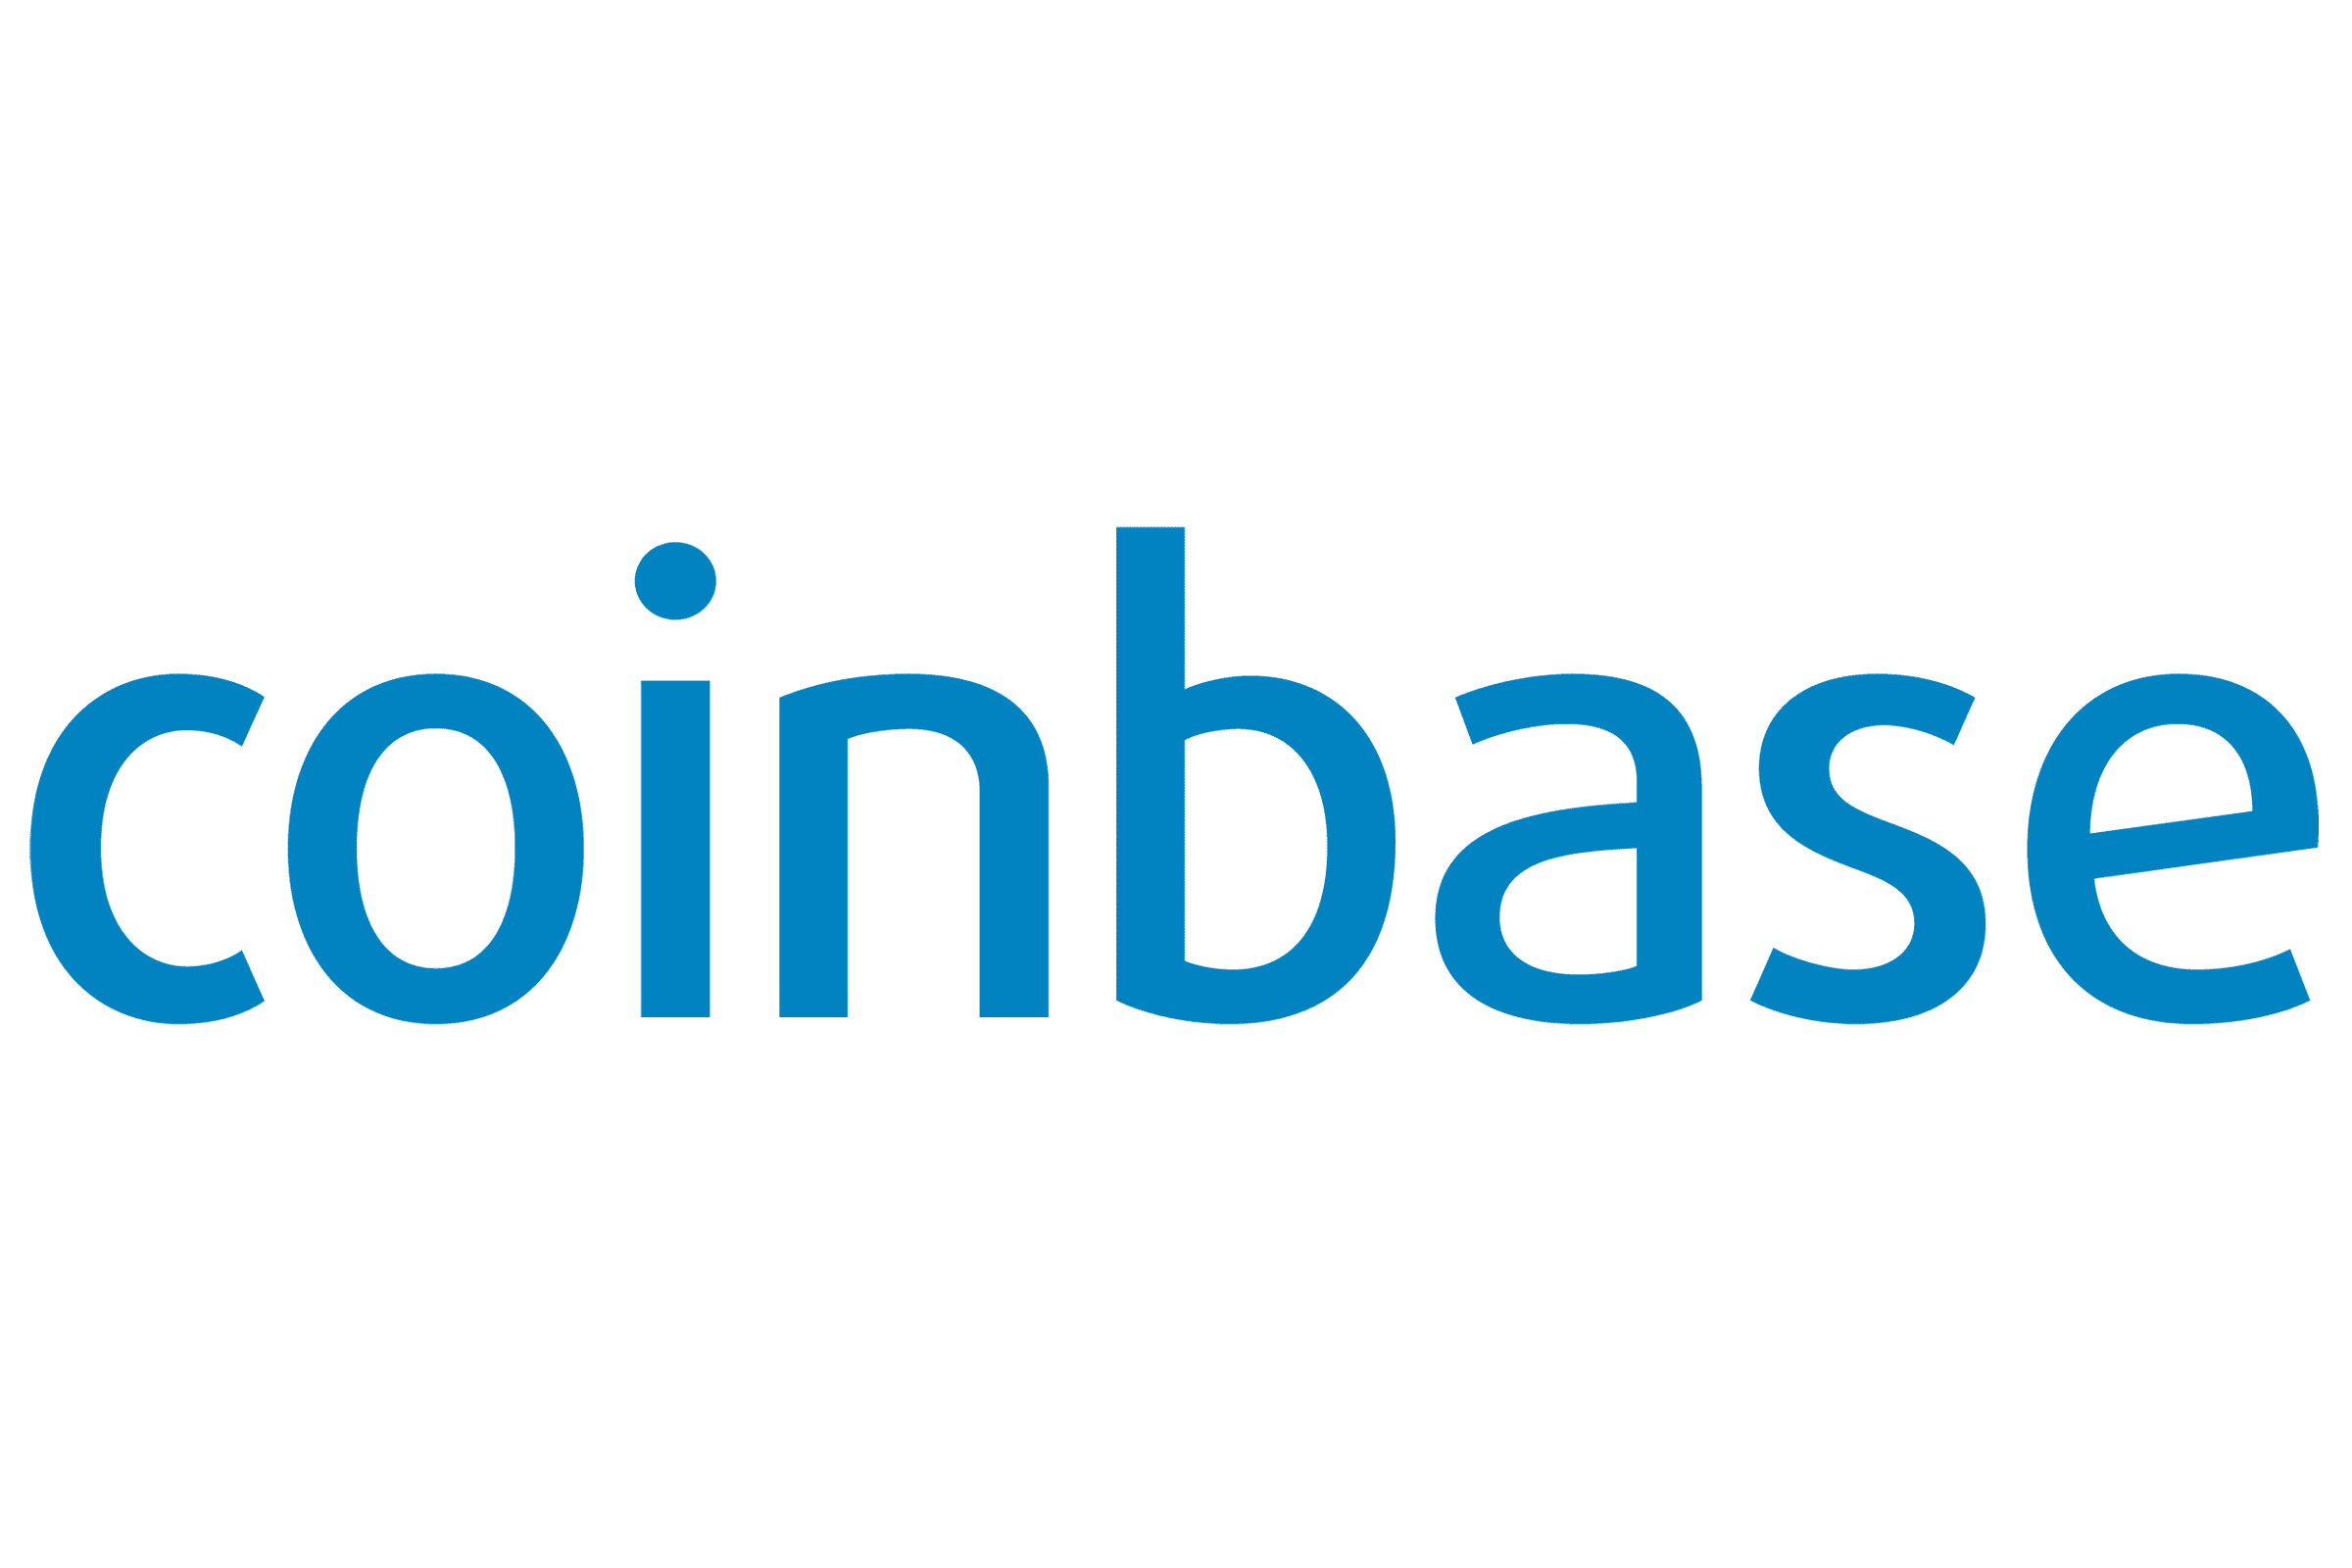 coinbase symbol on stock market